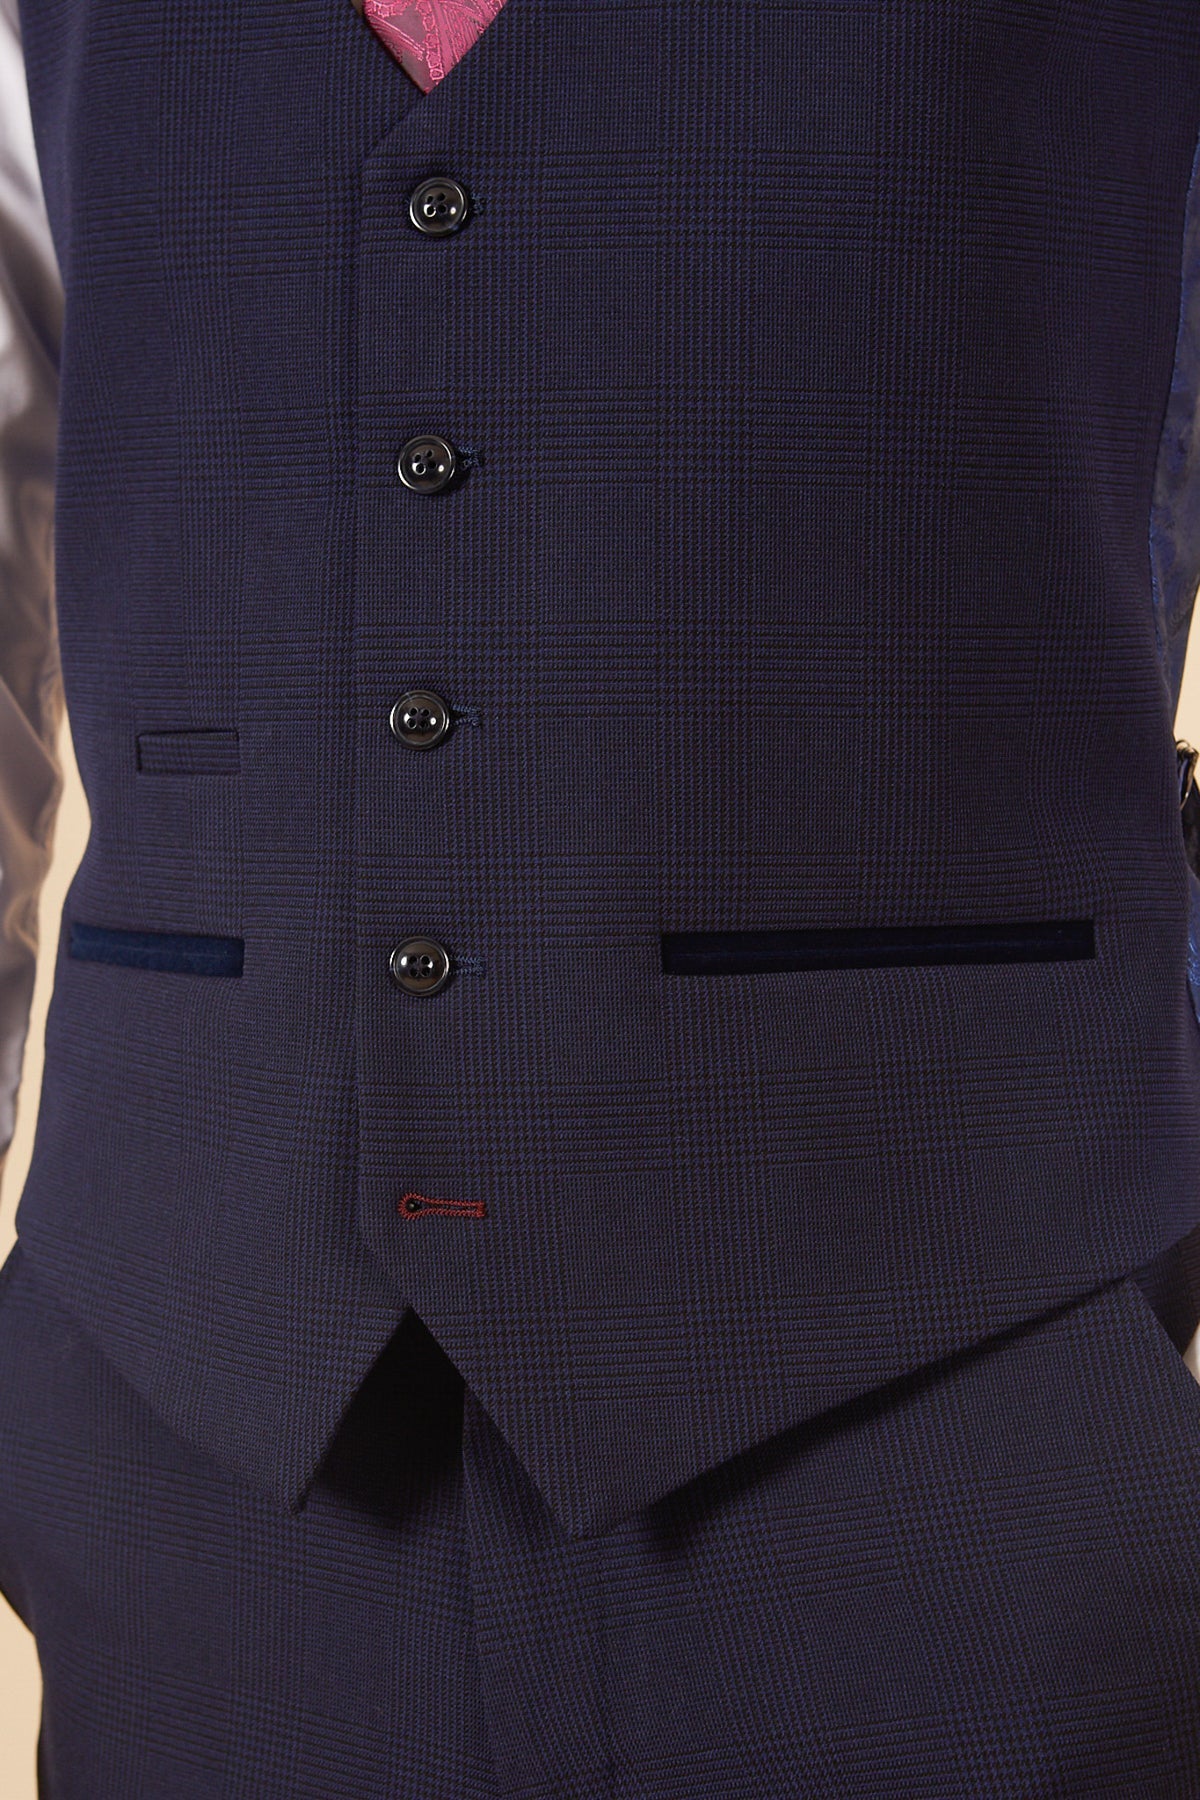 Men's Bromley Navy Waistcoat-Close Up View